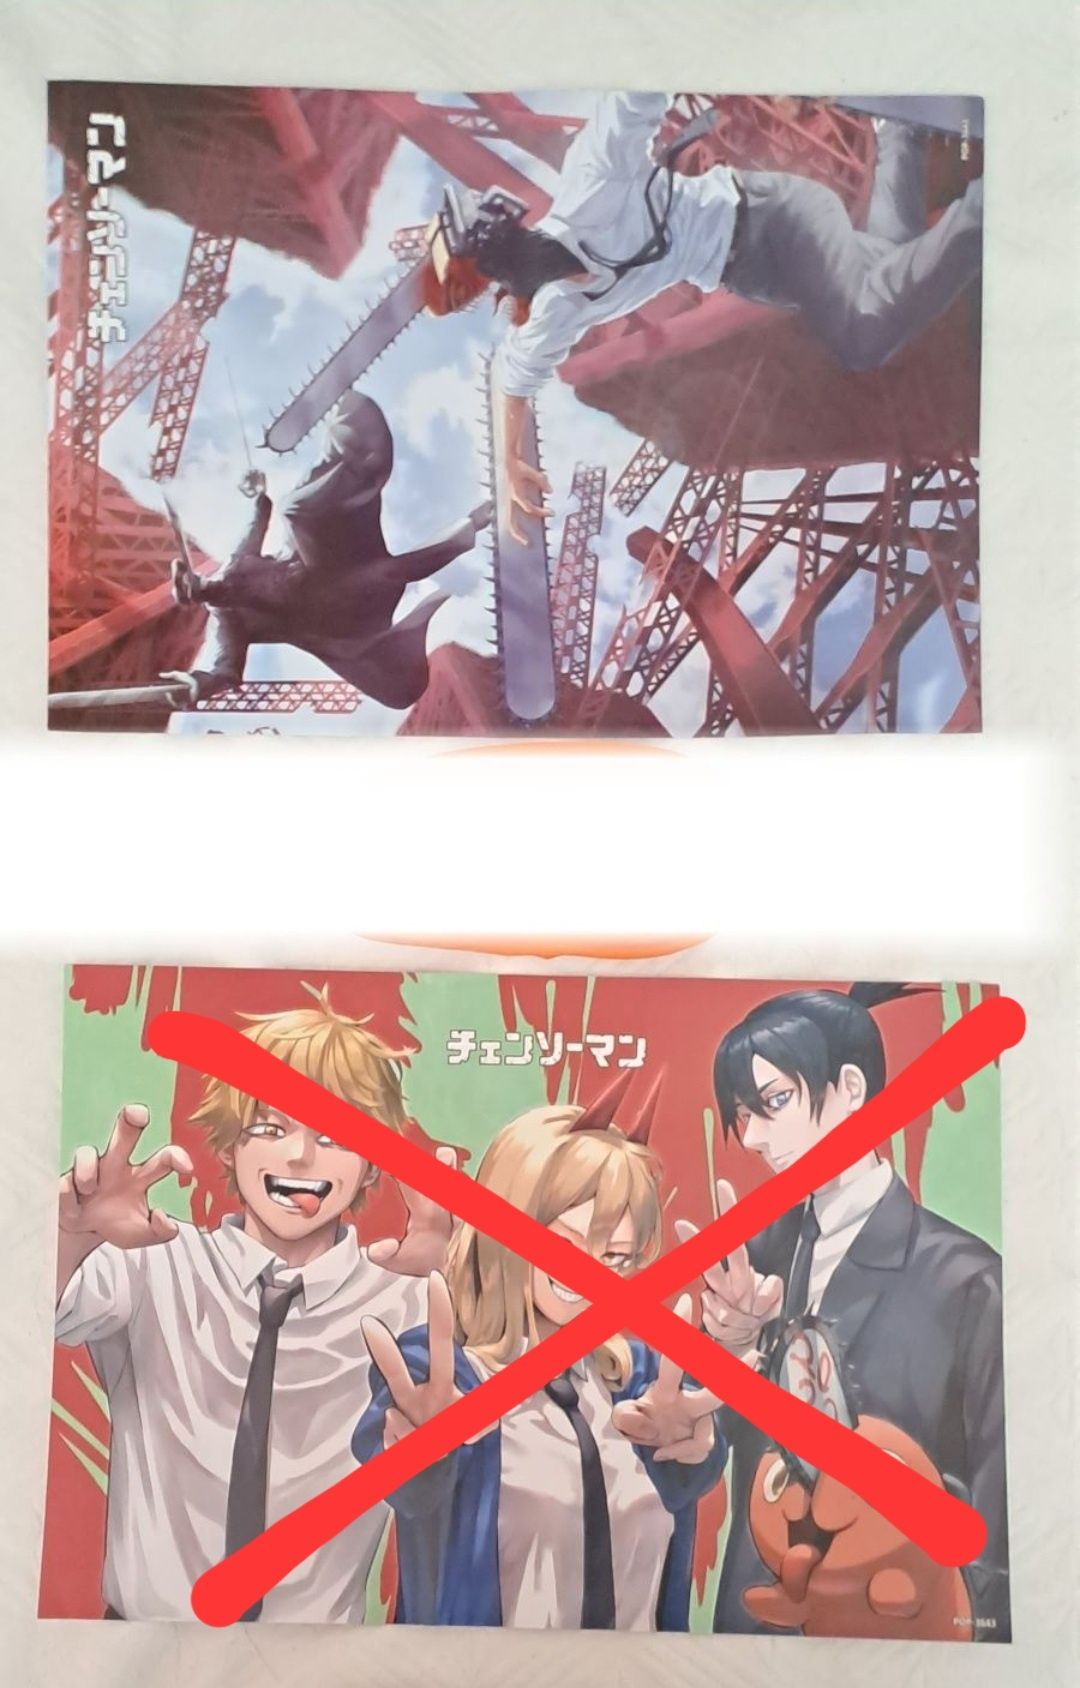 Posters animes variados